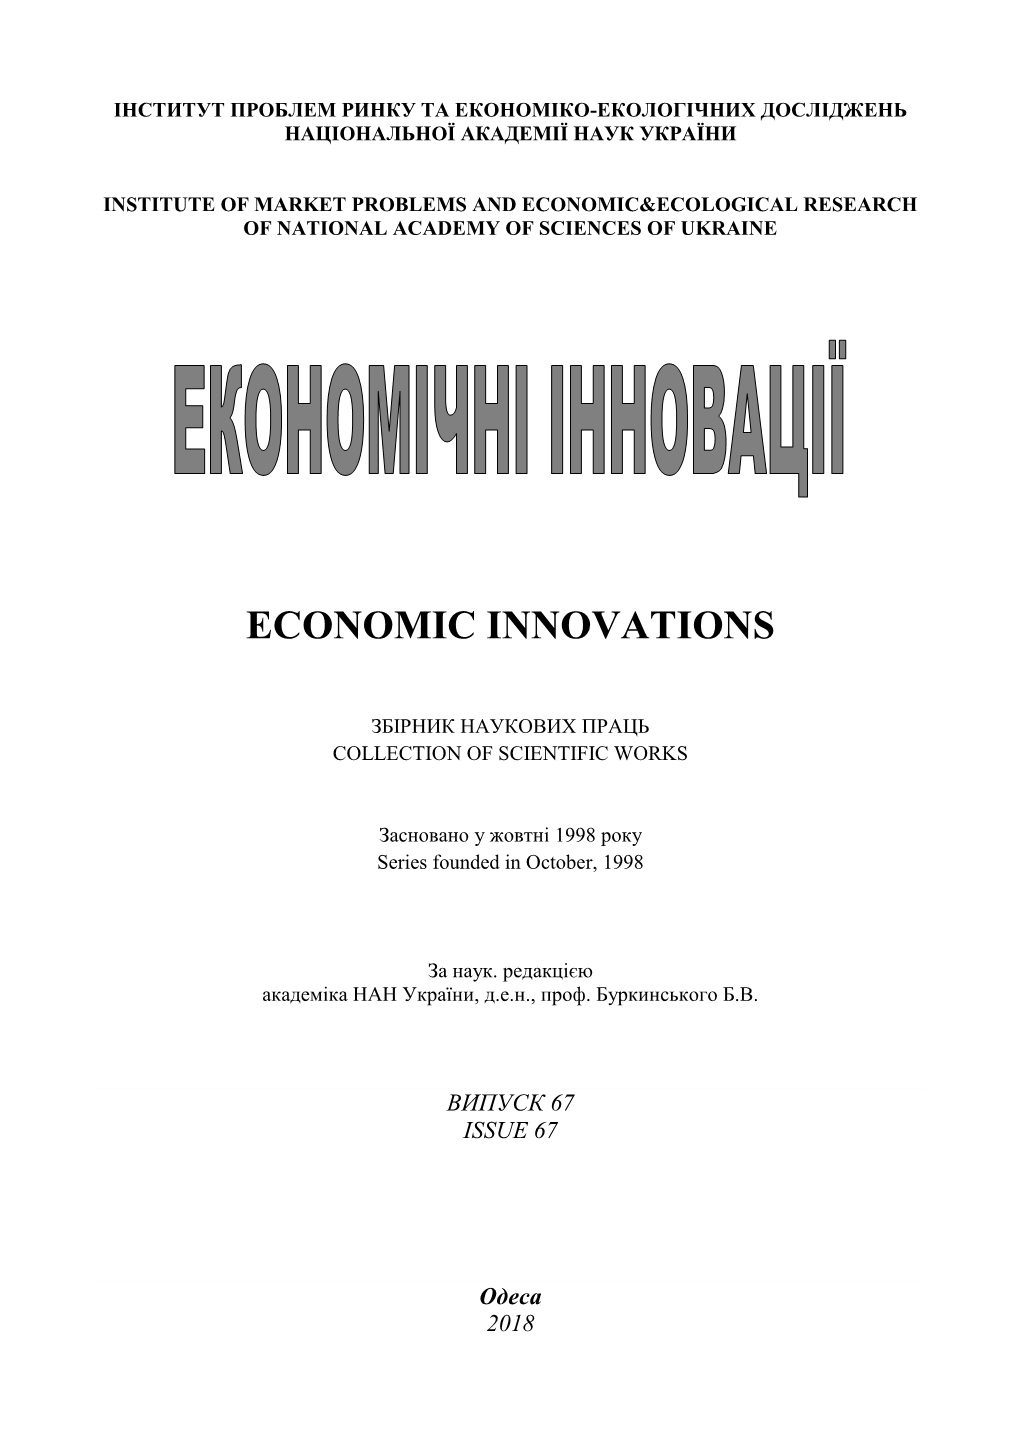 Economic Innovations